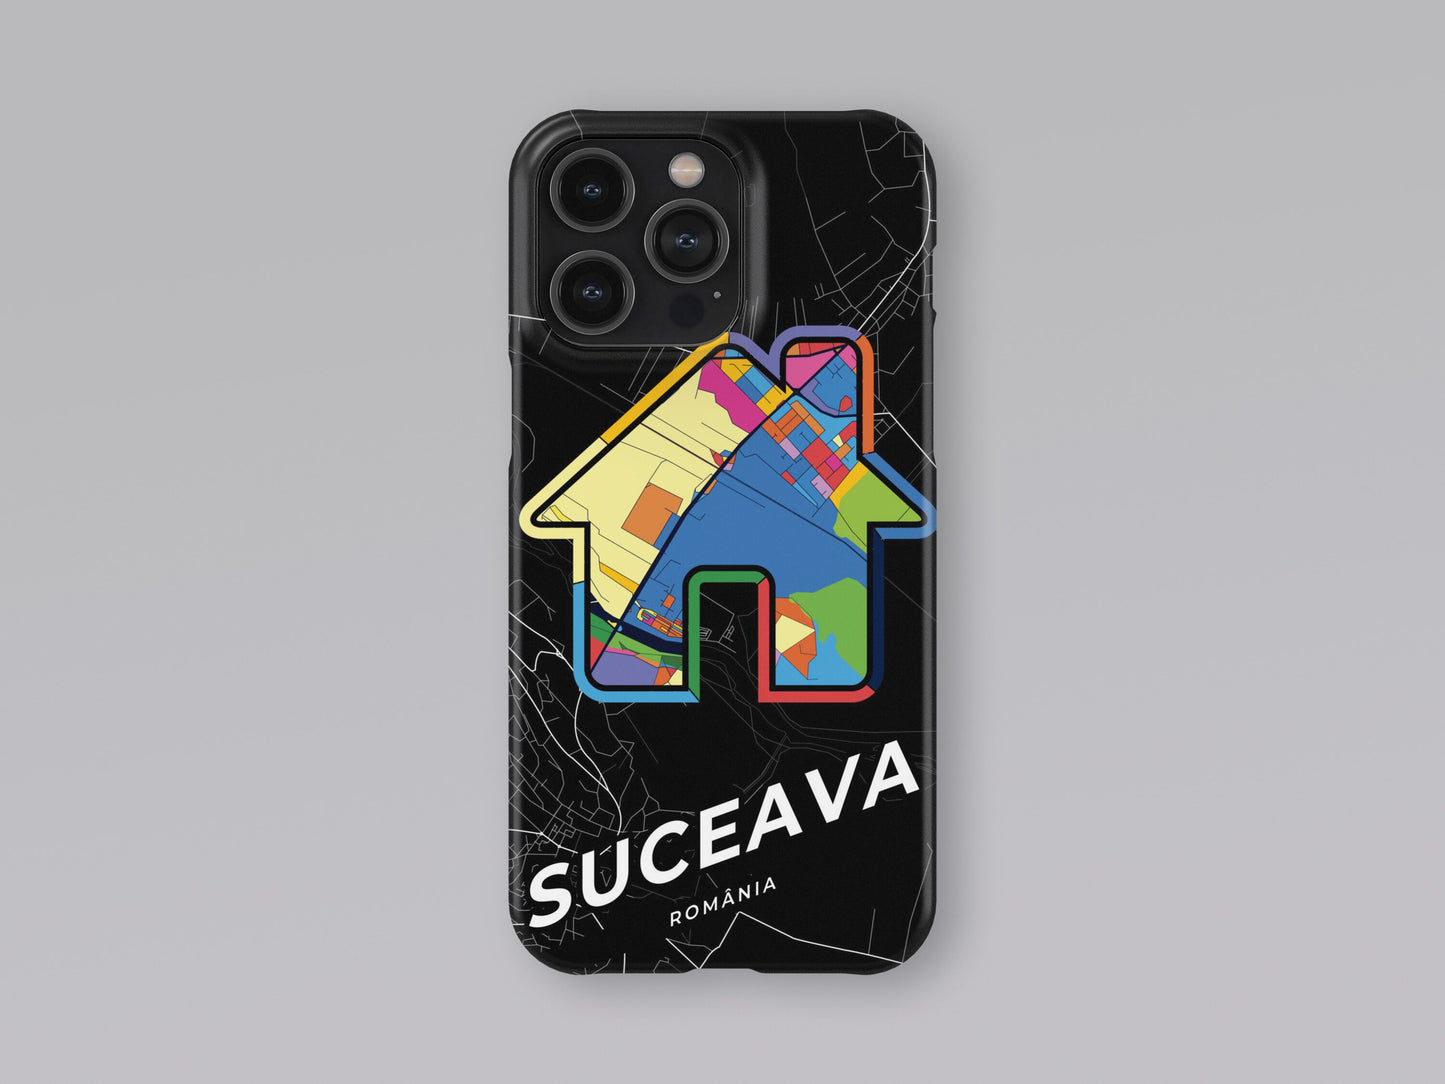 Suceava Romania slim phone case with colorful icon 3